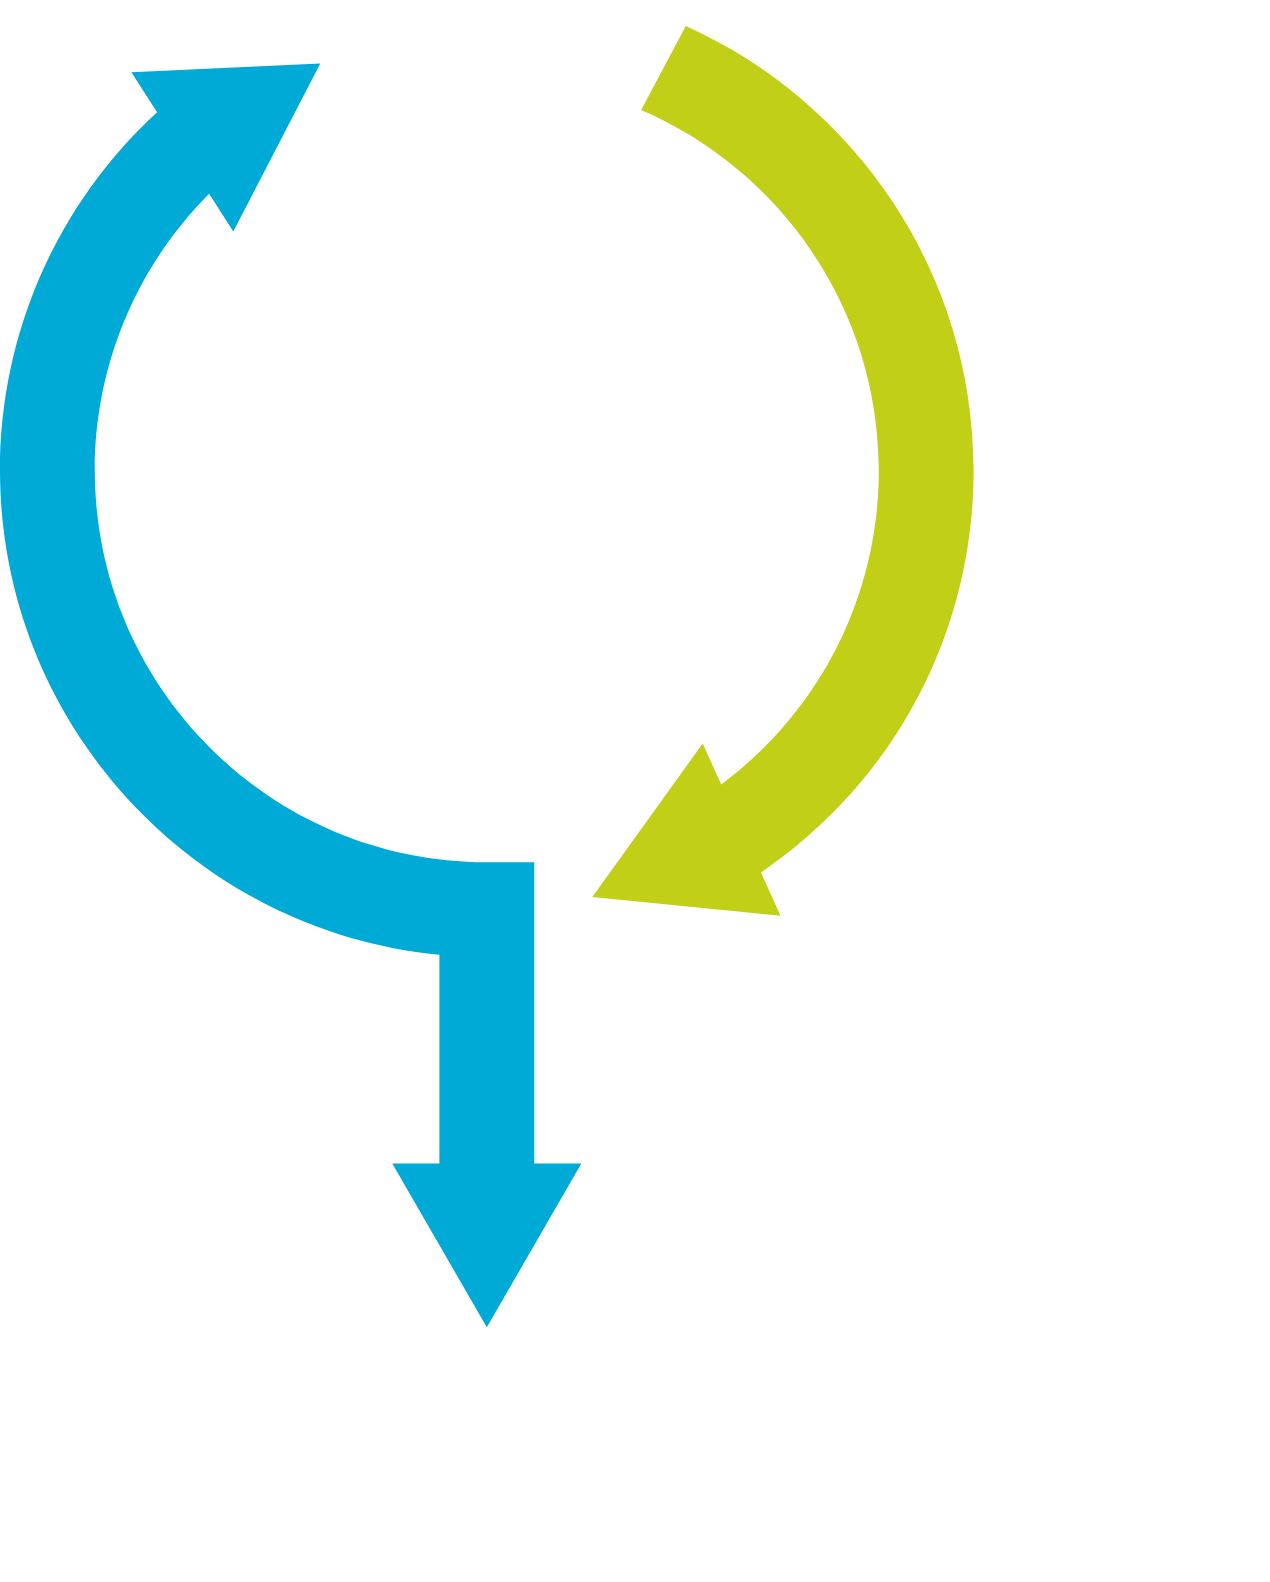 Feedback loop image: Overabundance of IL-1β can trigger a feedback loop, producing more IL-1β.